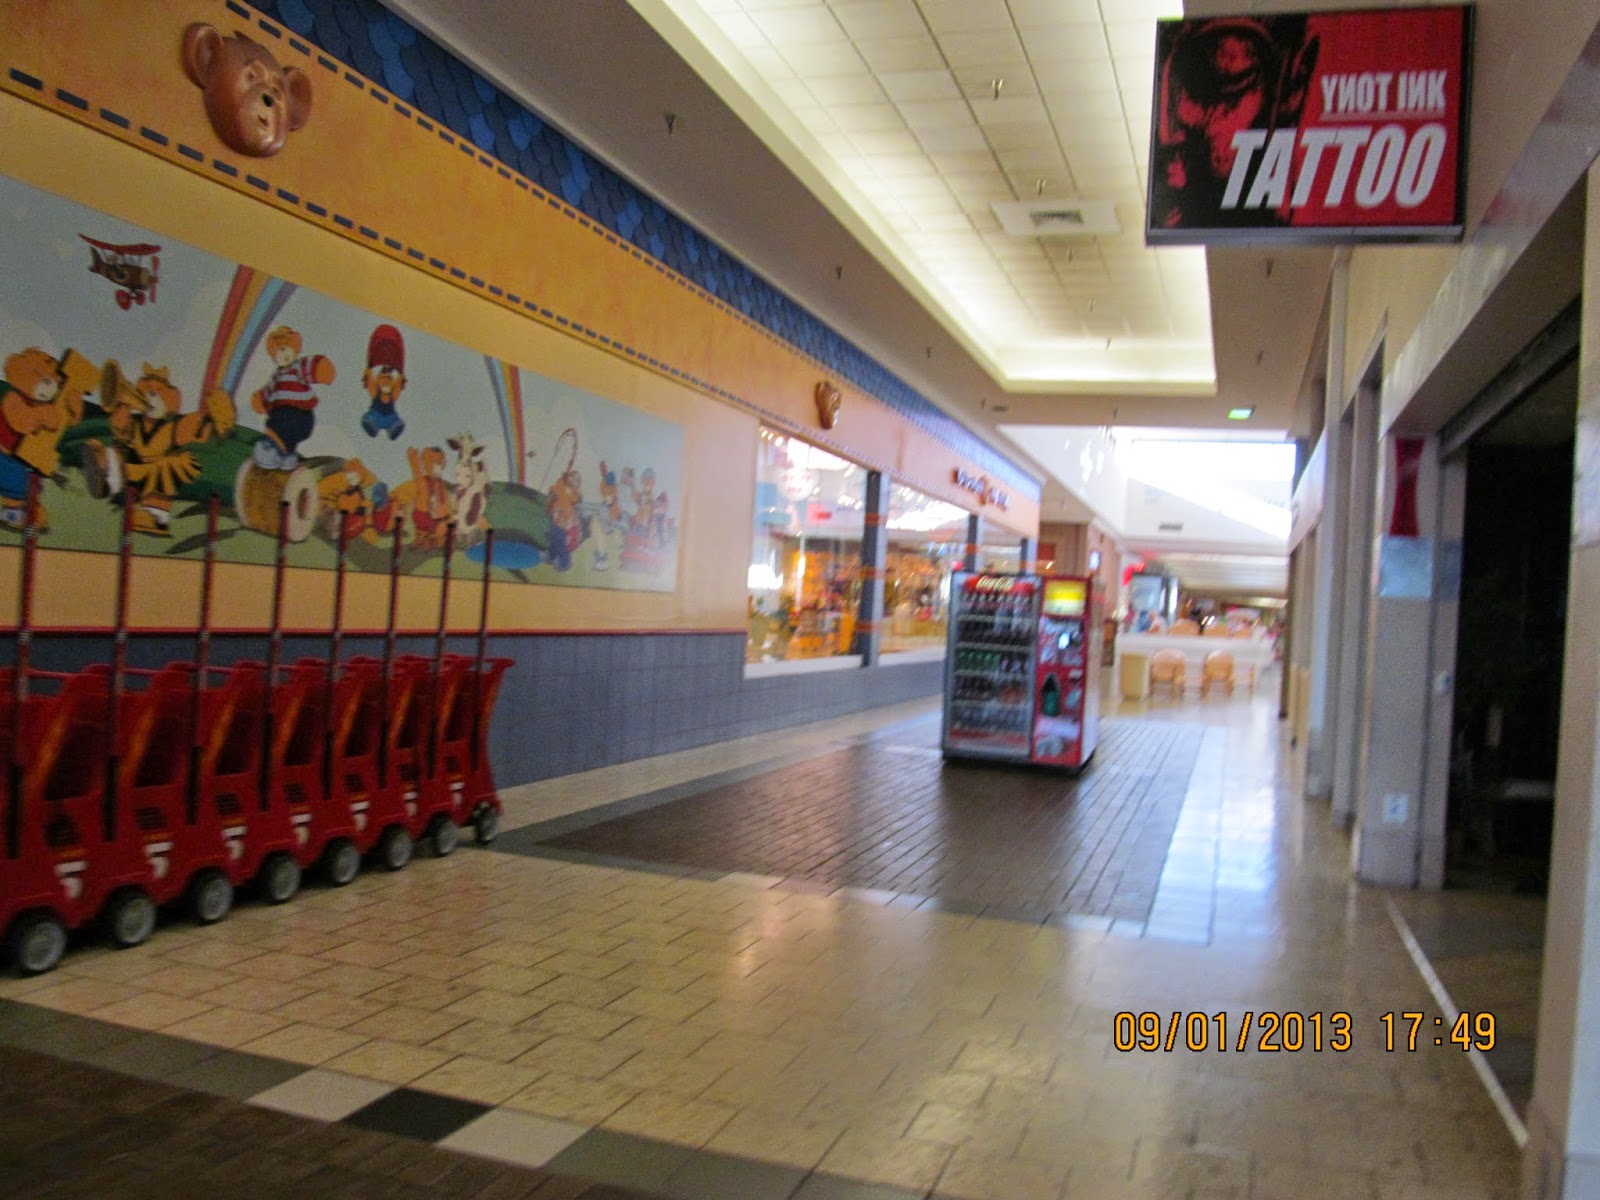 Northpark Mall - Davenport, Iowa - Food Court, I think this…